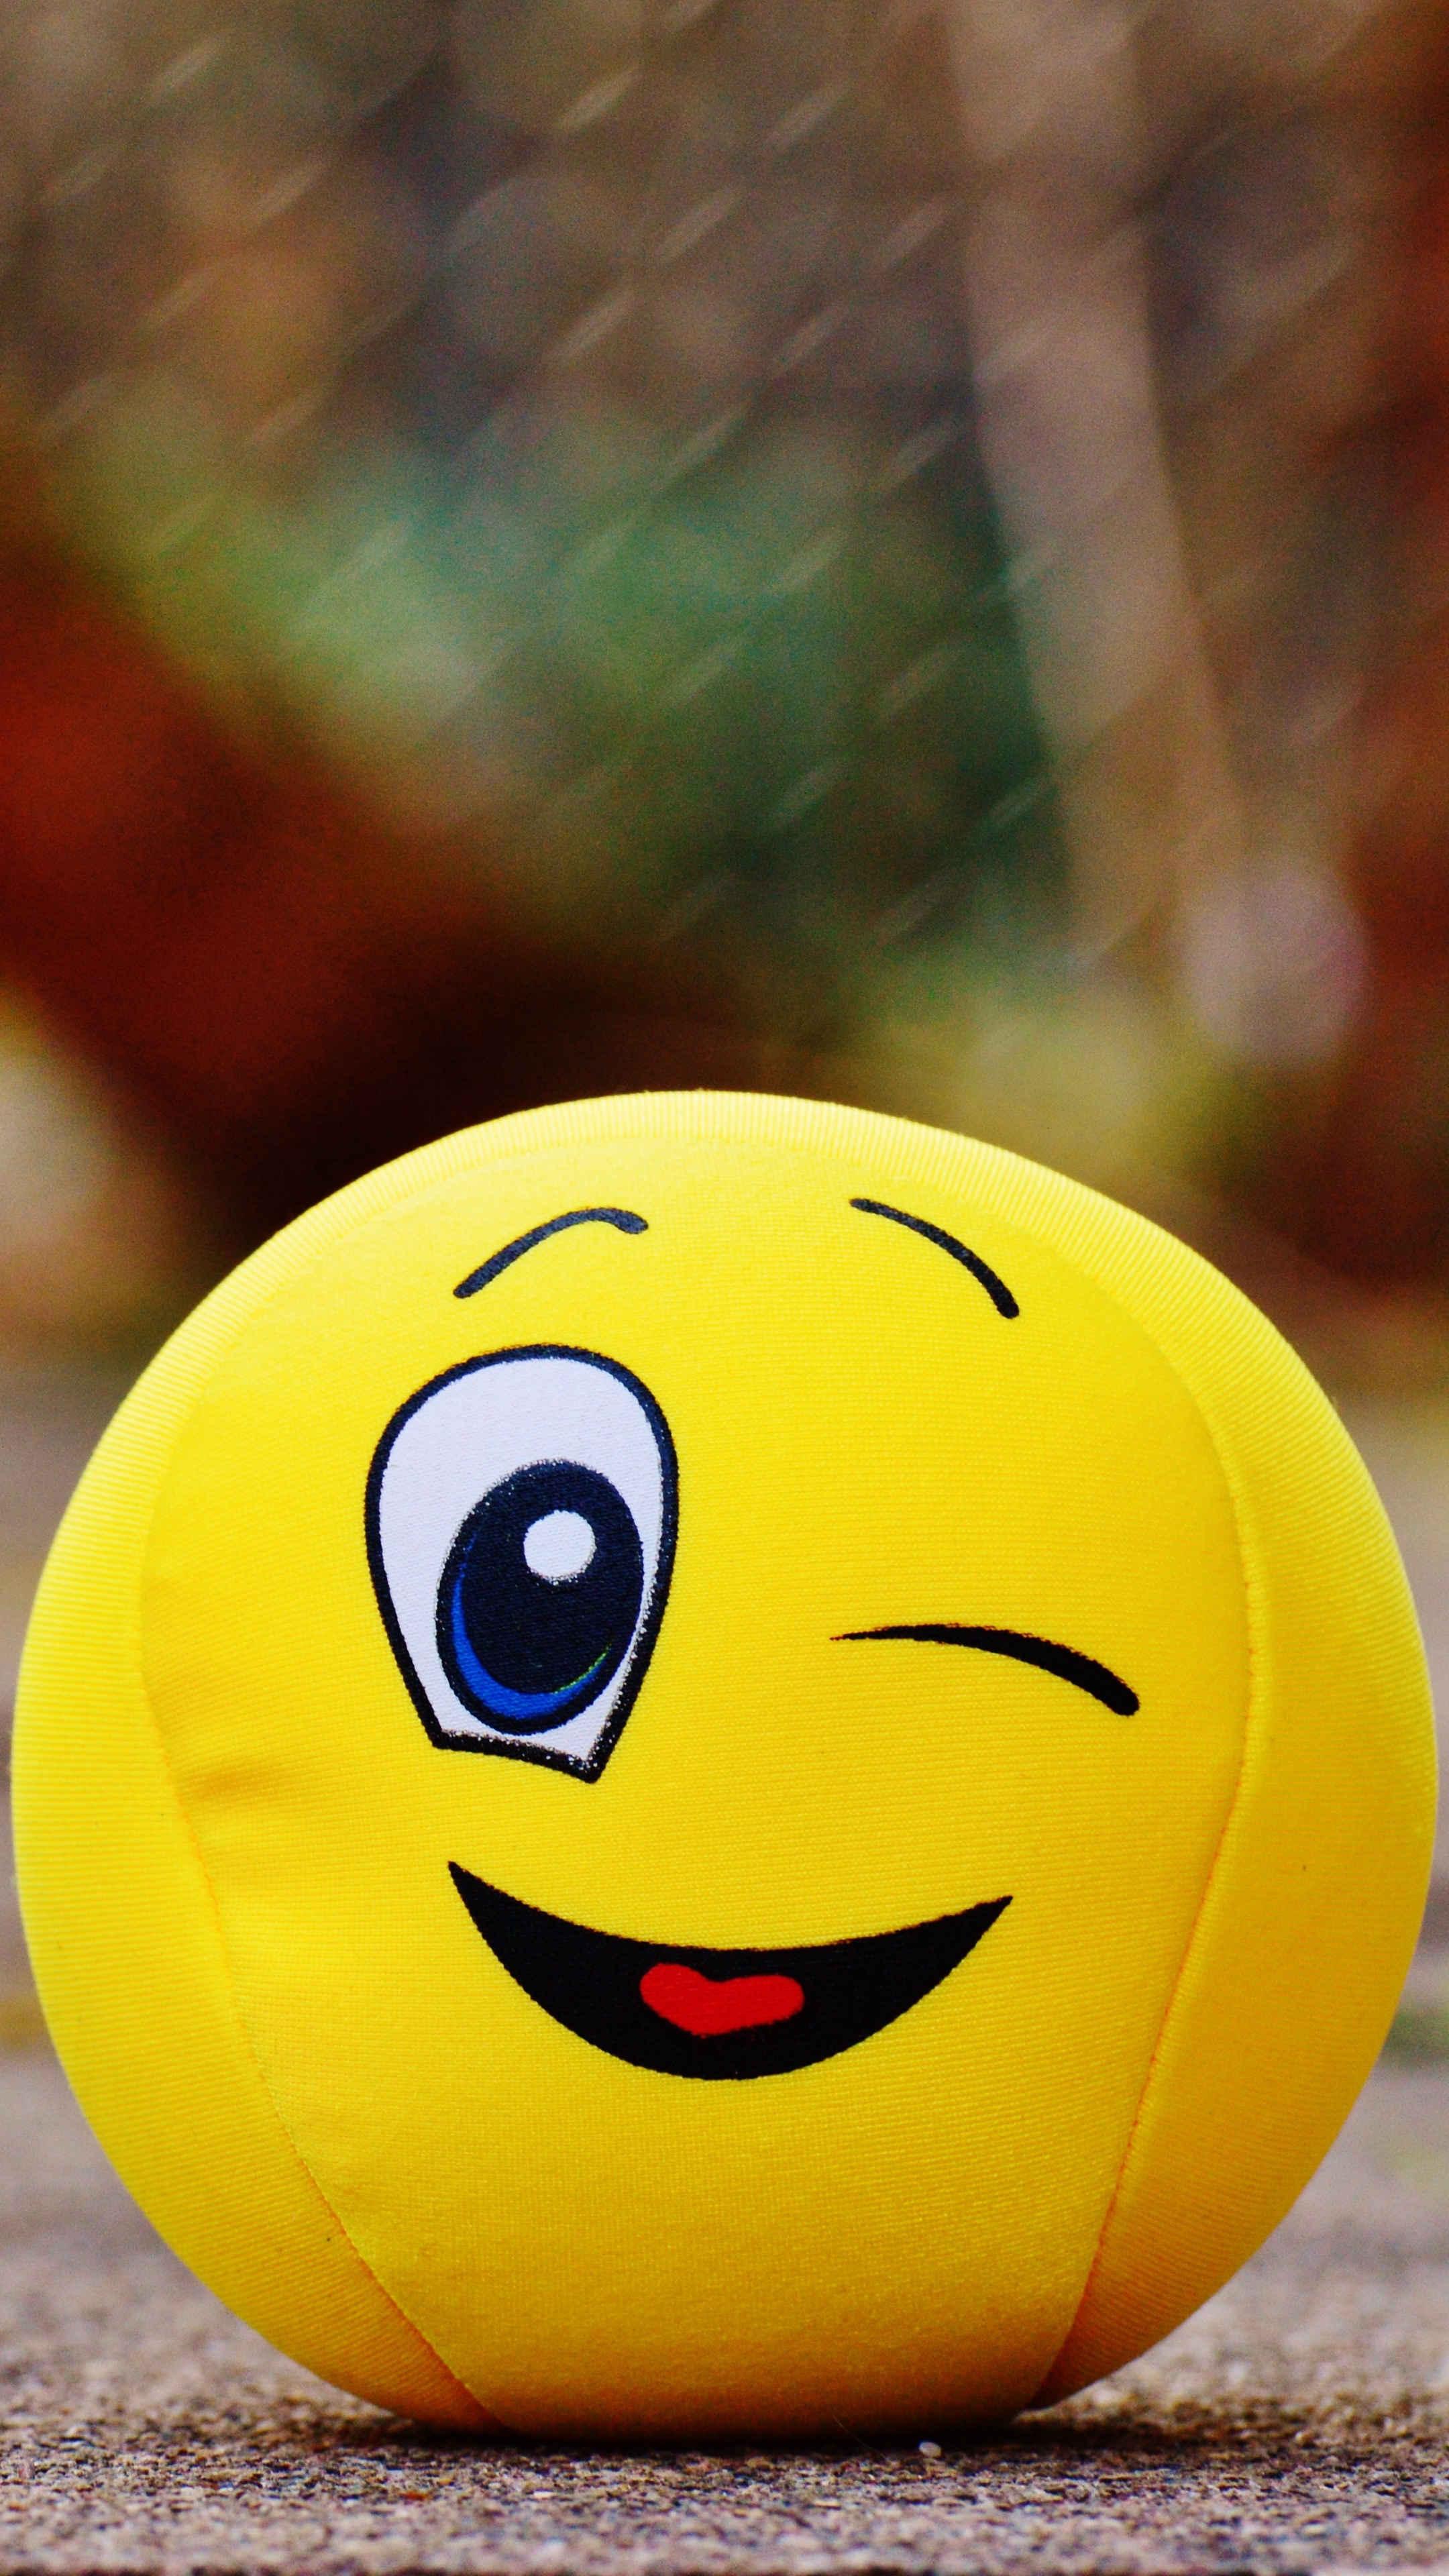 Ball Smile By Alexas Iwallpaper